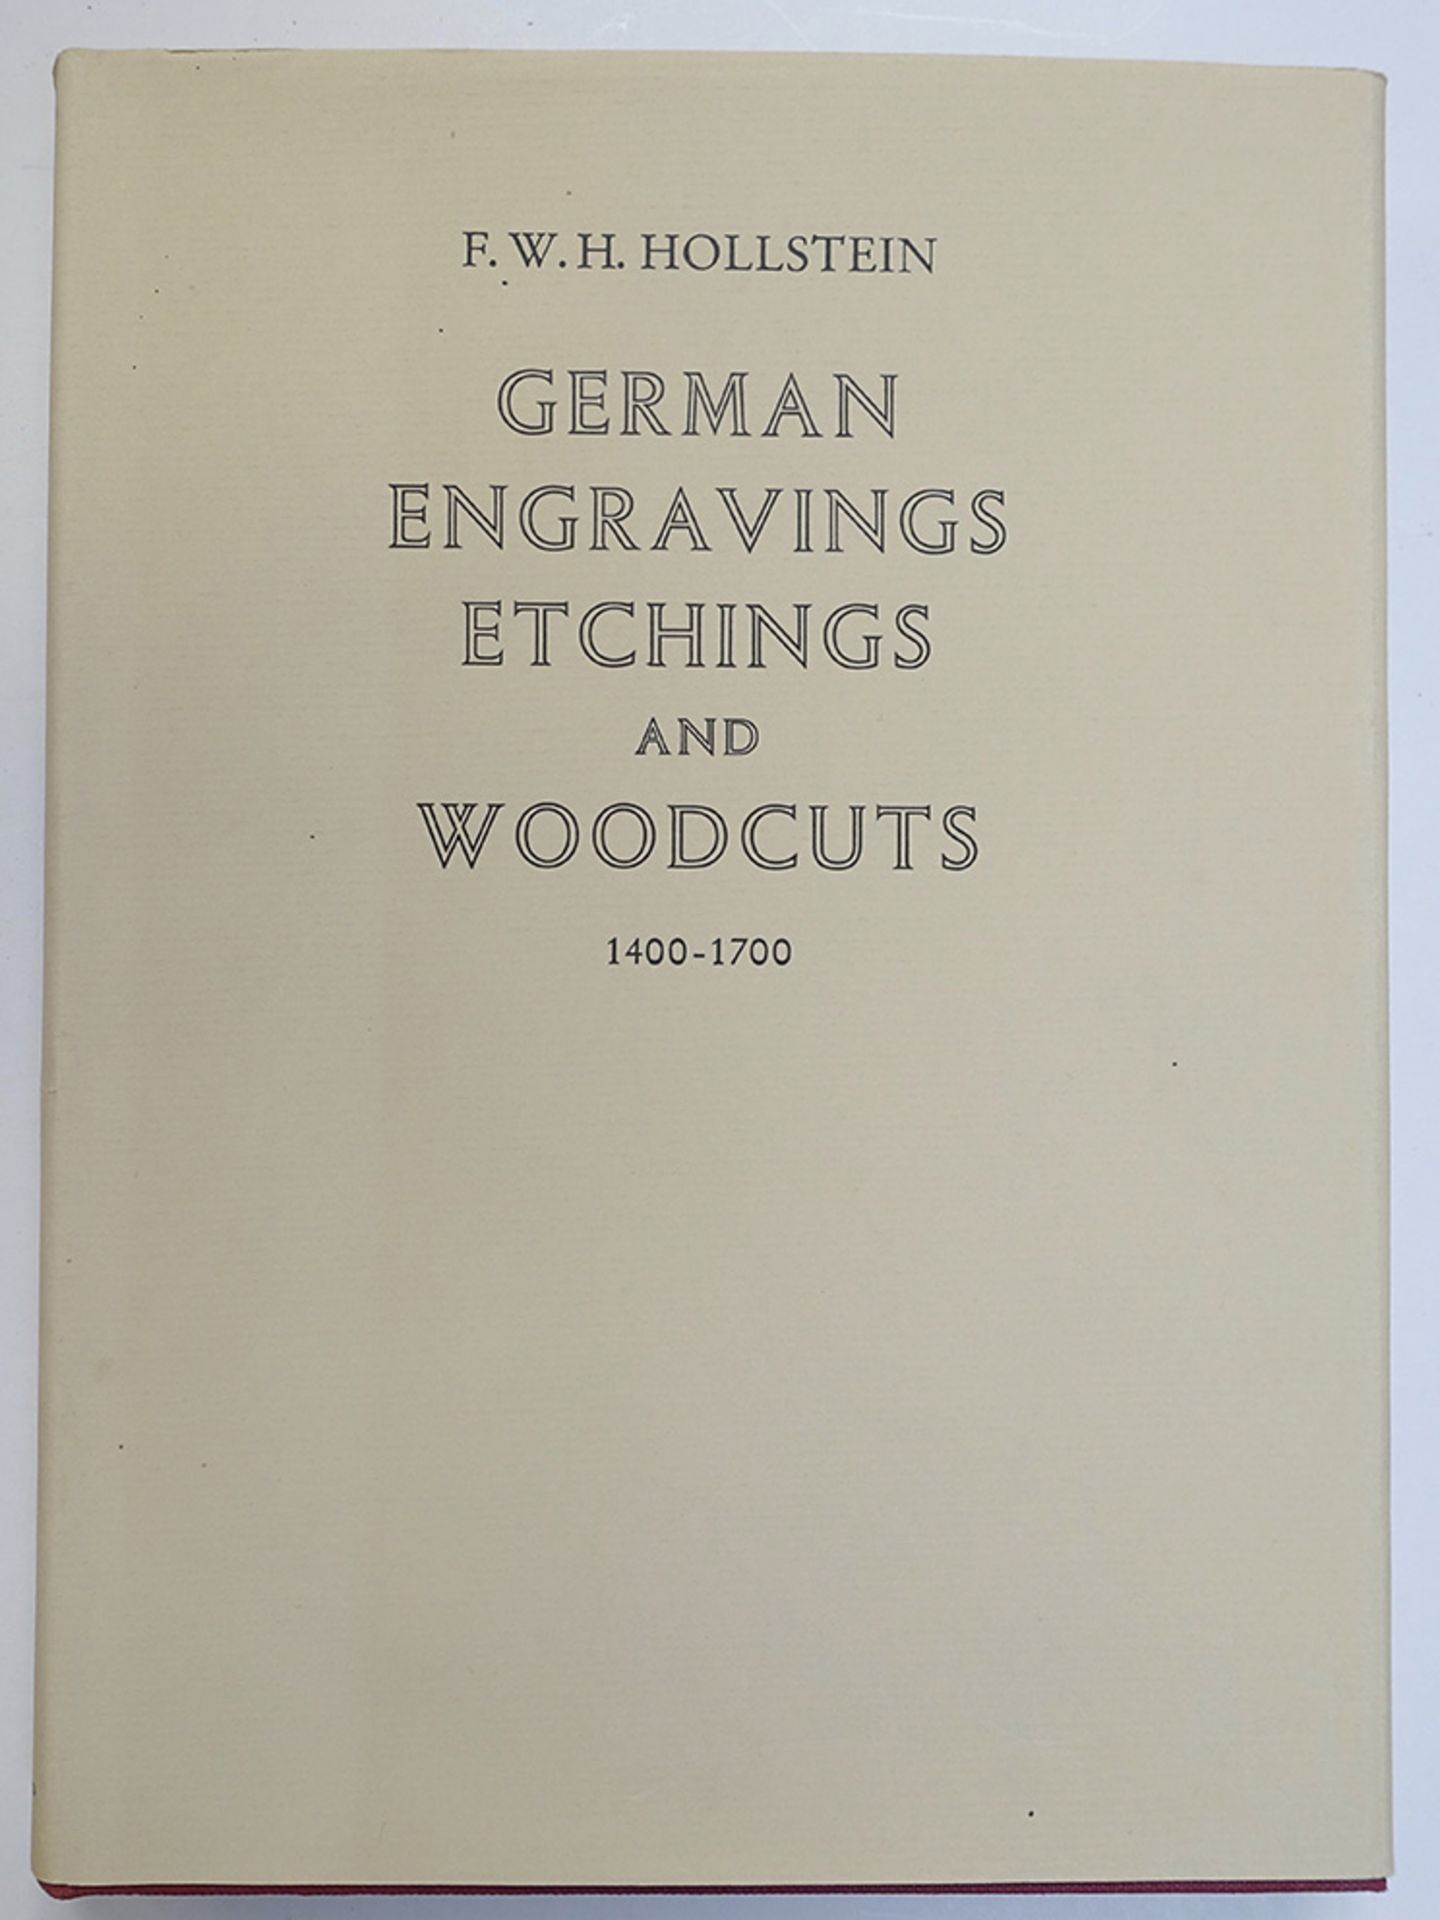 REFERENCE WORKS -- HOLLSTEIN, F.W.H. German Engravings, Etchings and Woodcuts, ca. 1400-1700. Vols.